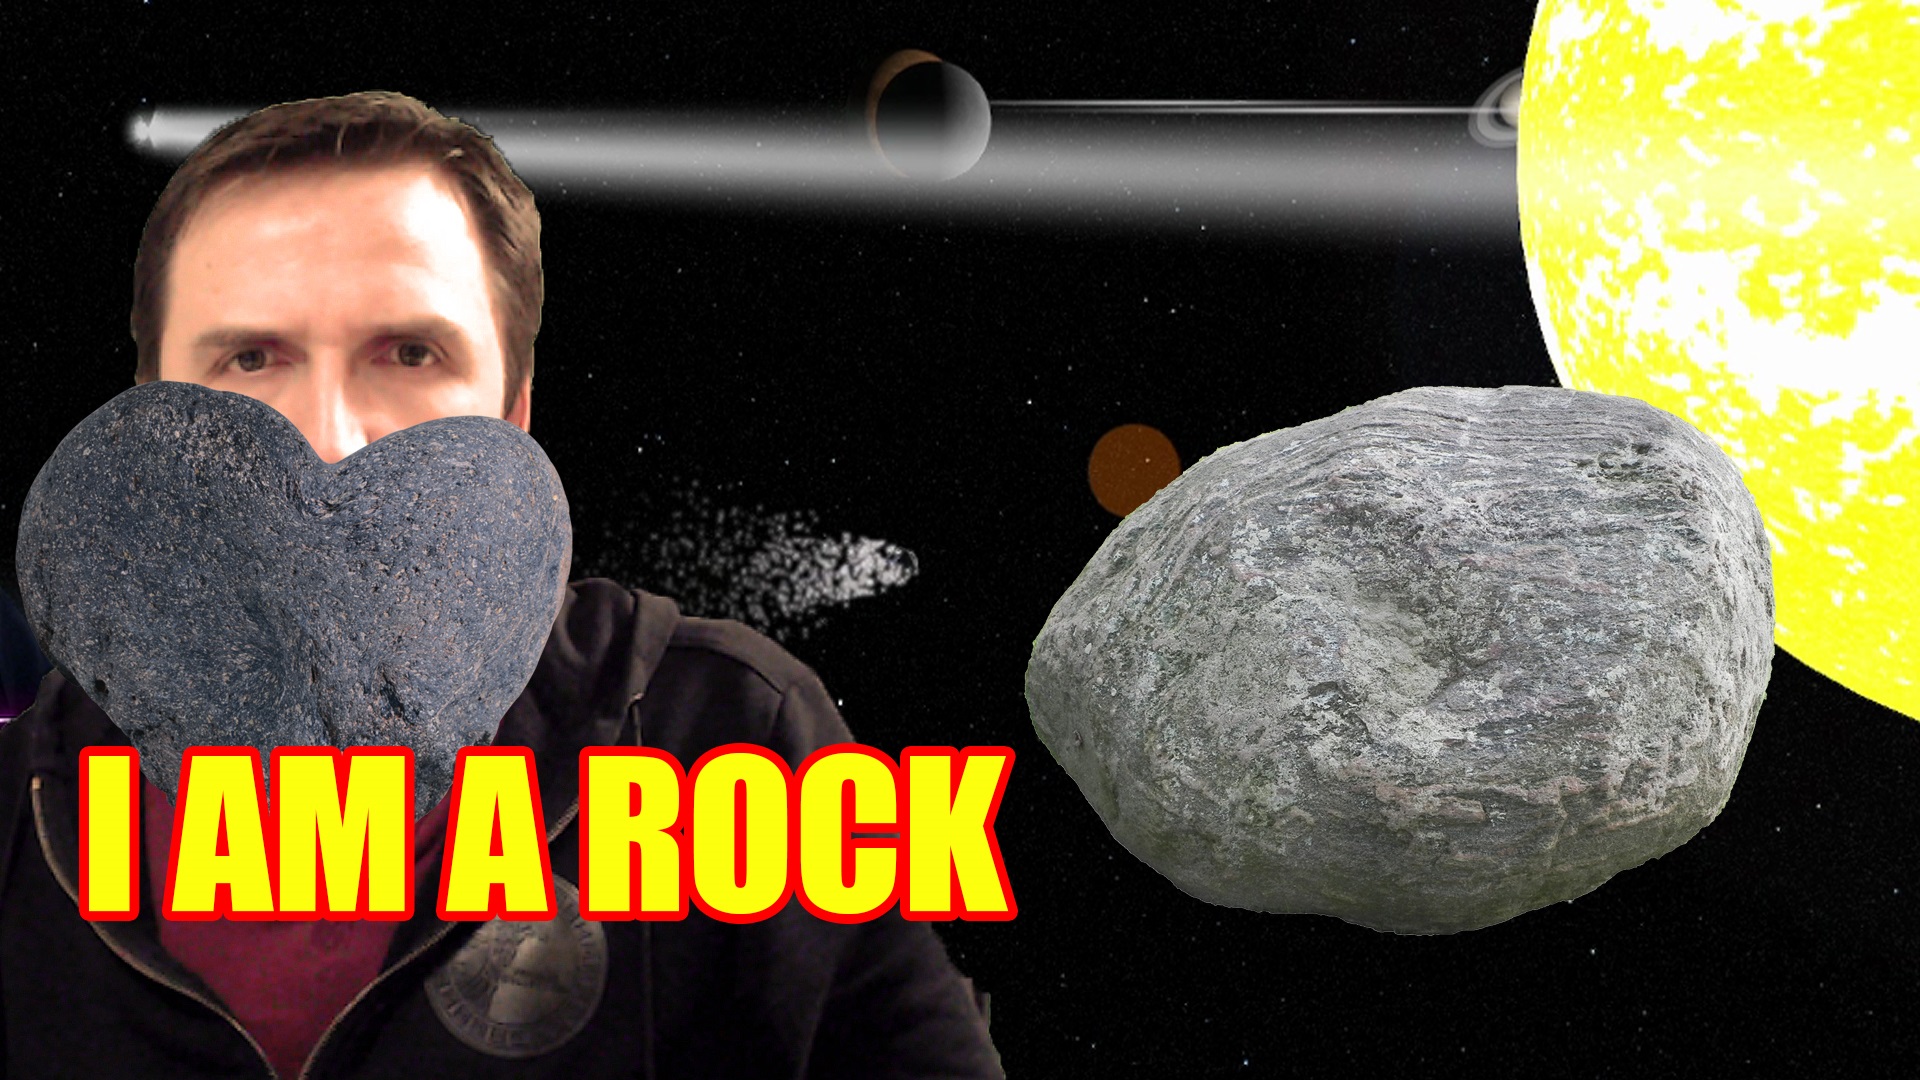 I Am a rock - Solar system odysey - На землю летит астероид